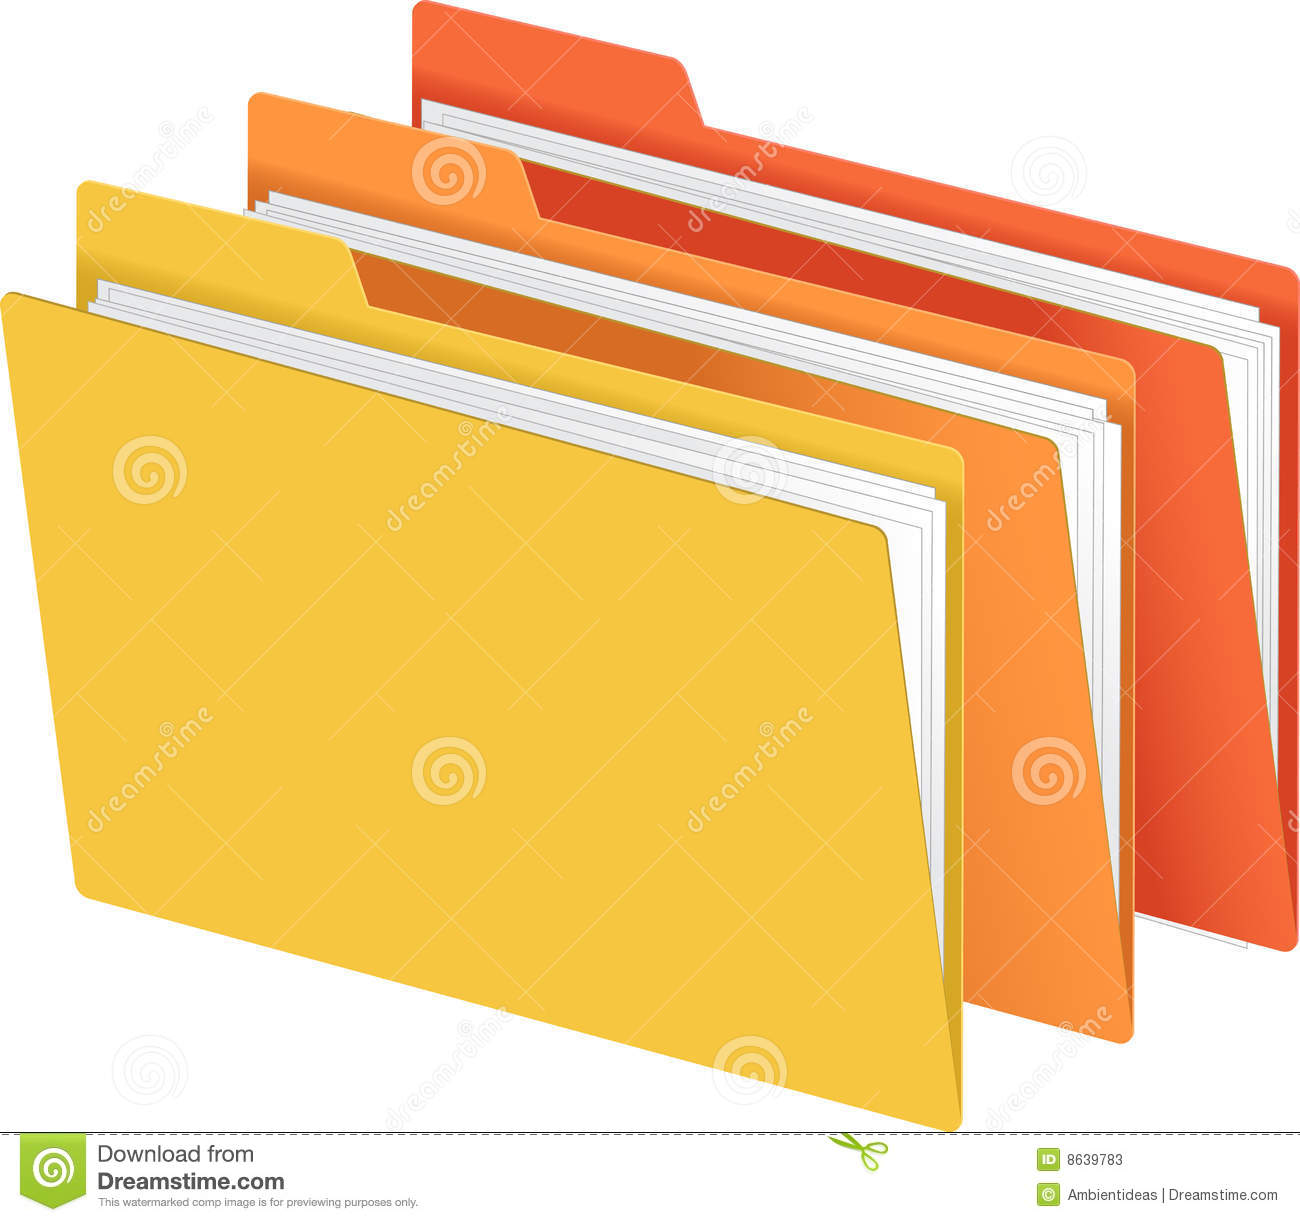 File Folder Vector Illustration With Bright Color Folders  Each Folder